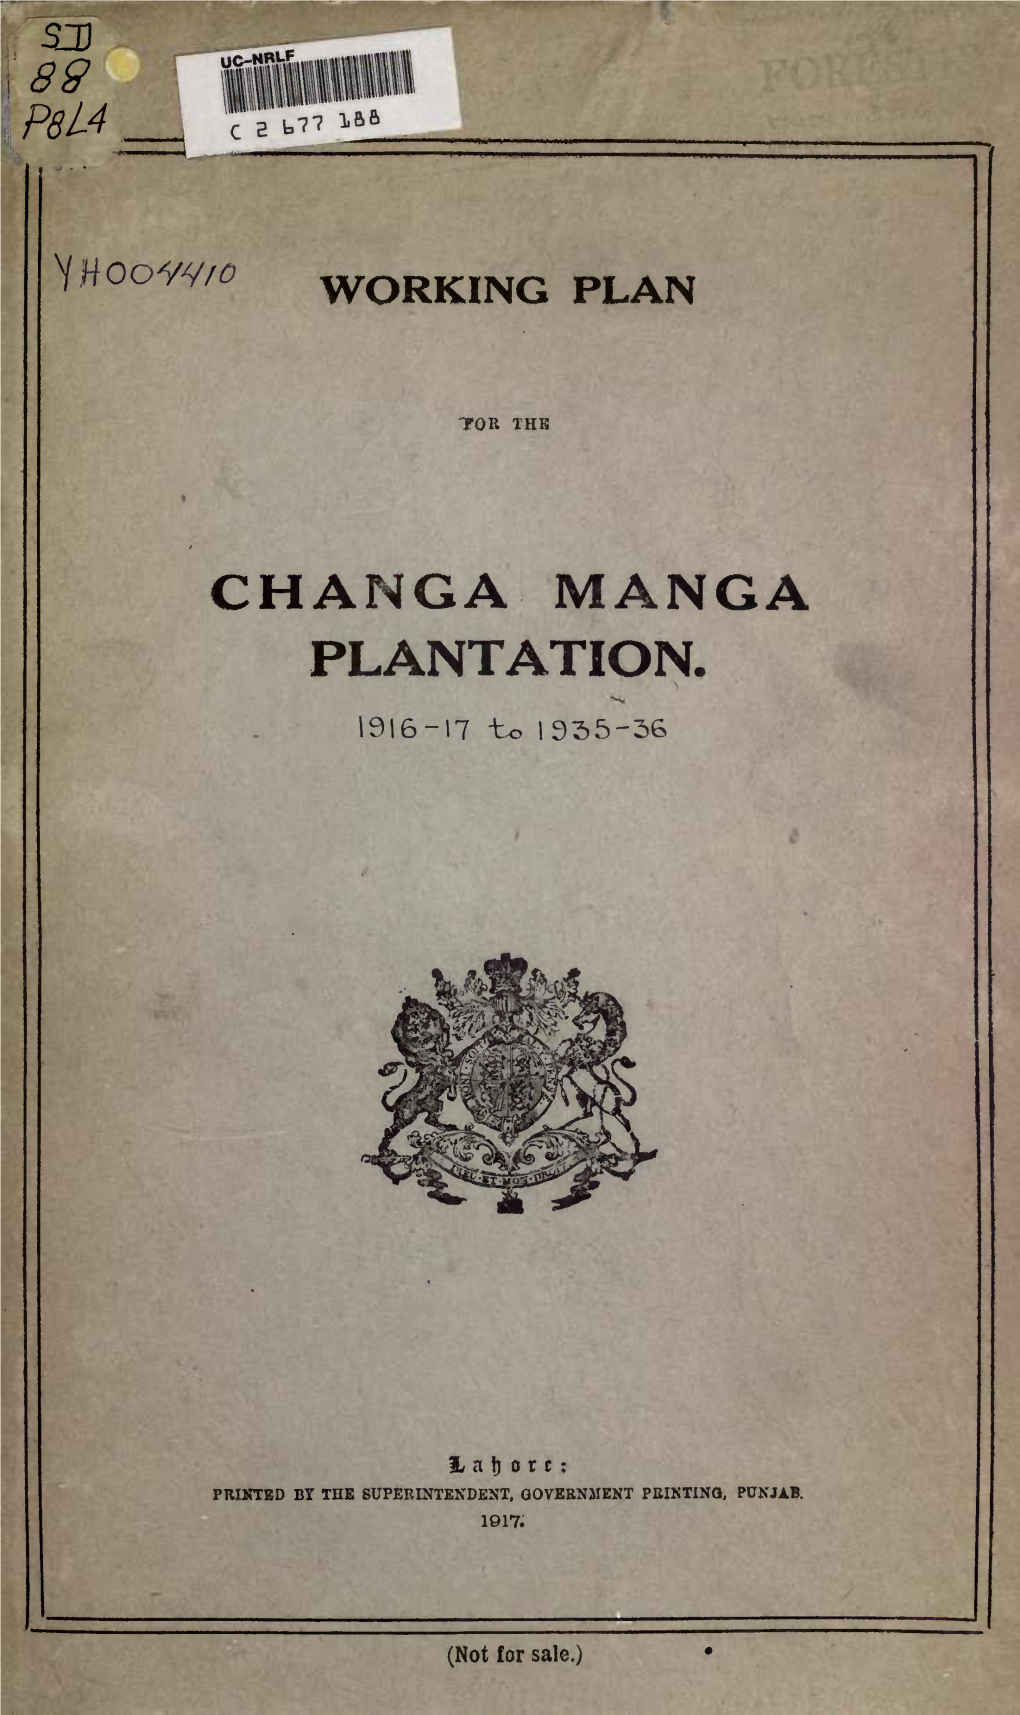 Changa Manga Plantation